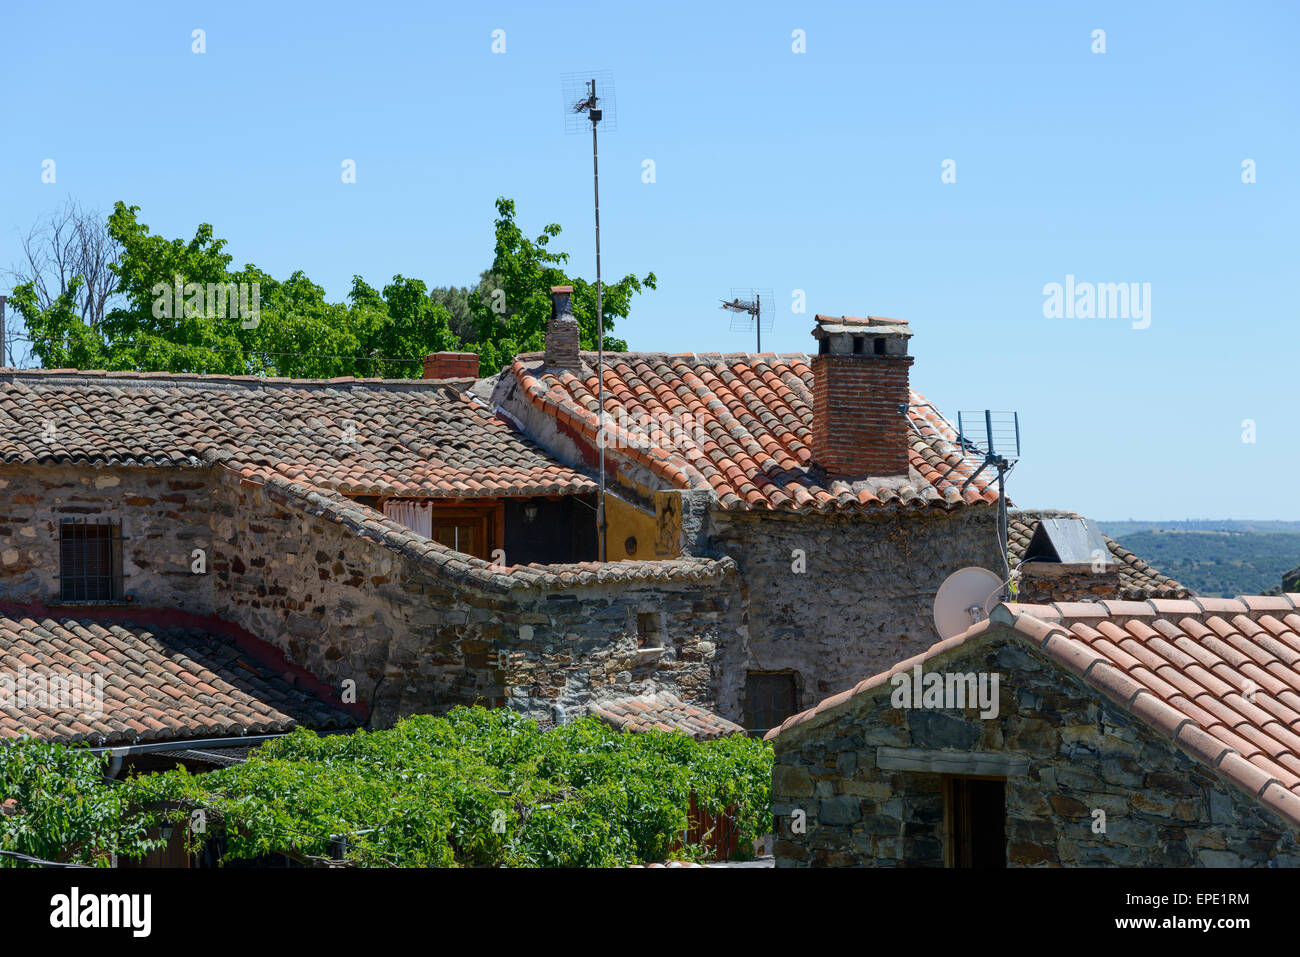 Restaurant in Patones de Arriba (old town in Spain) with slate buildings Stock Photo